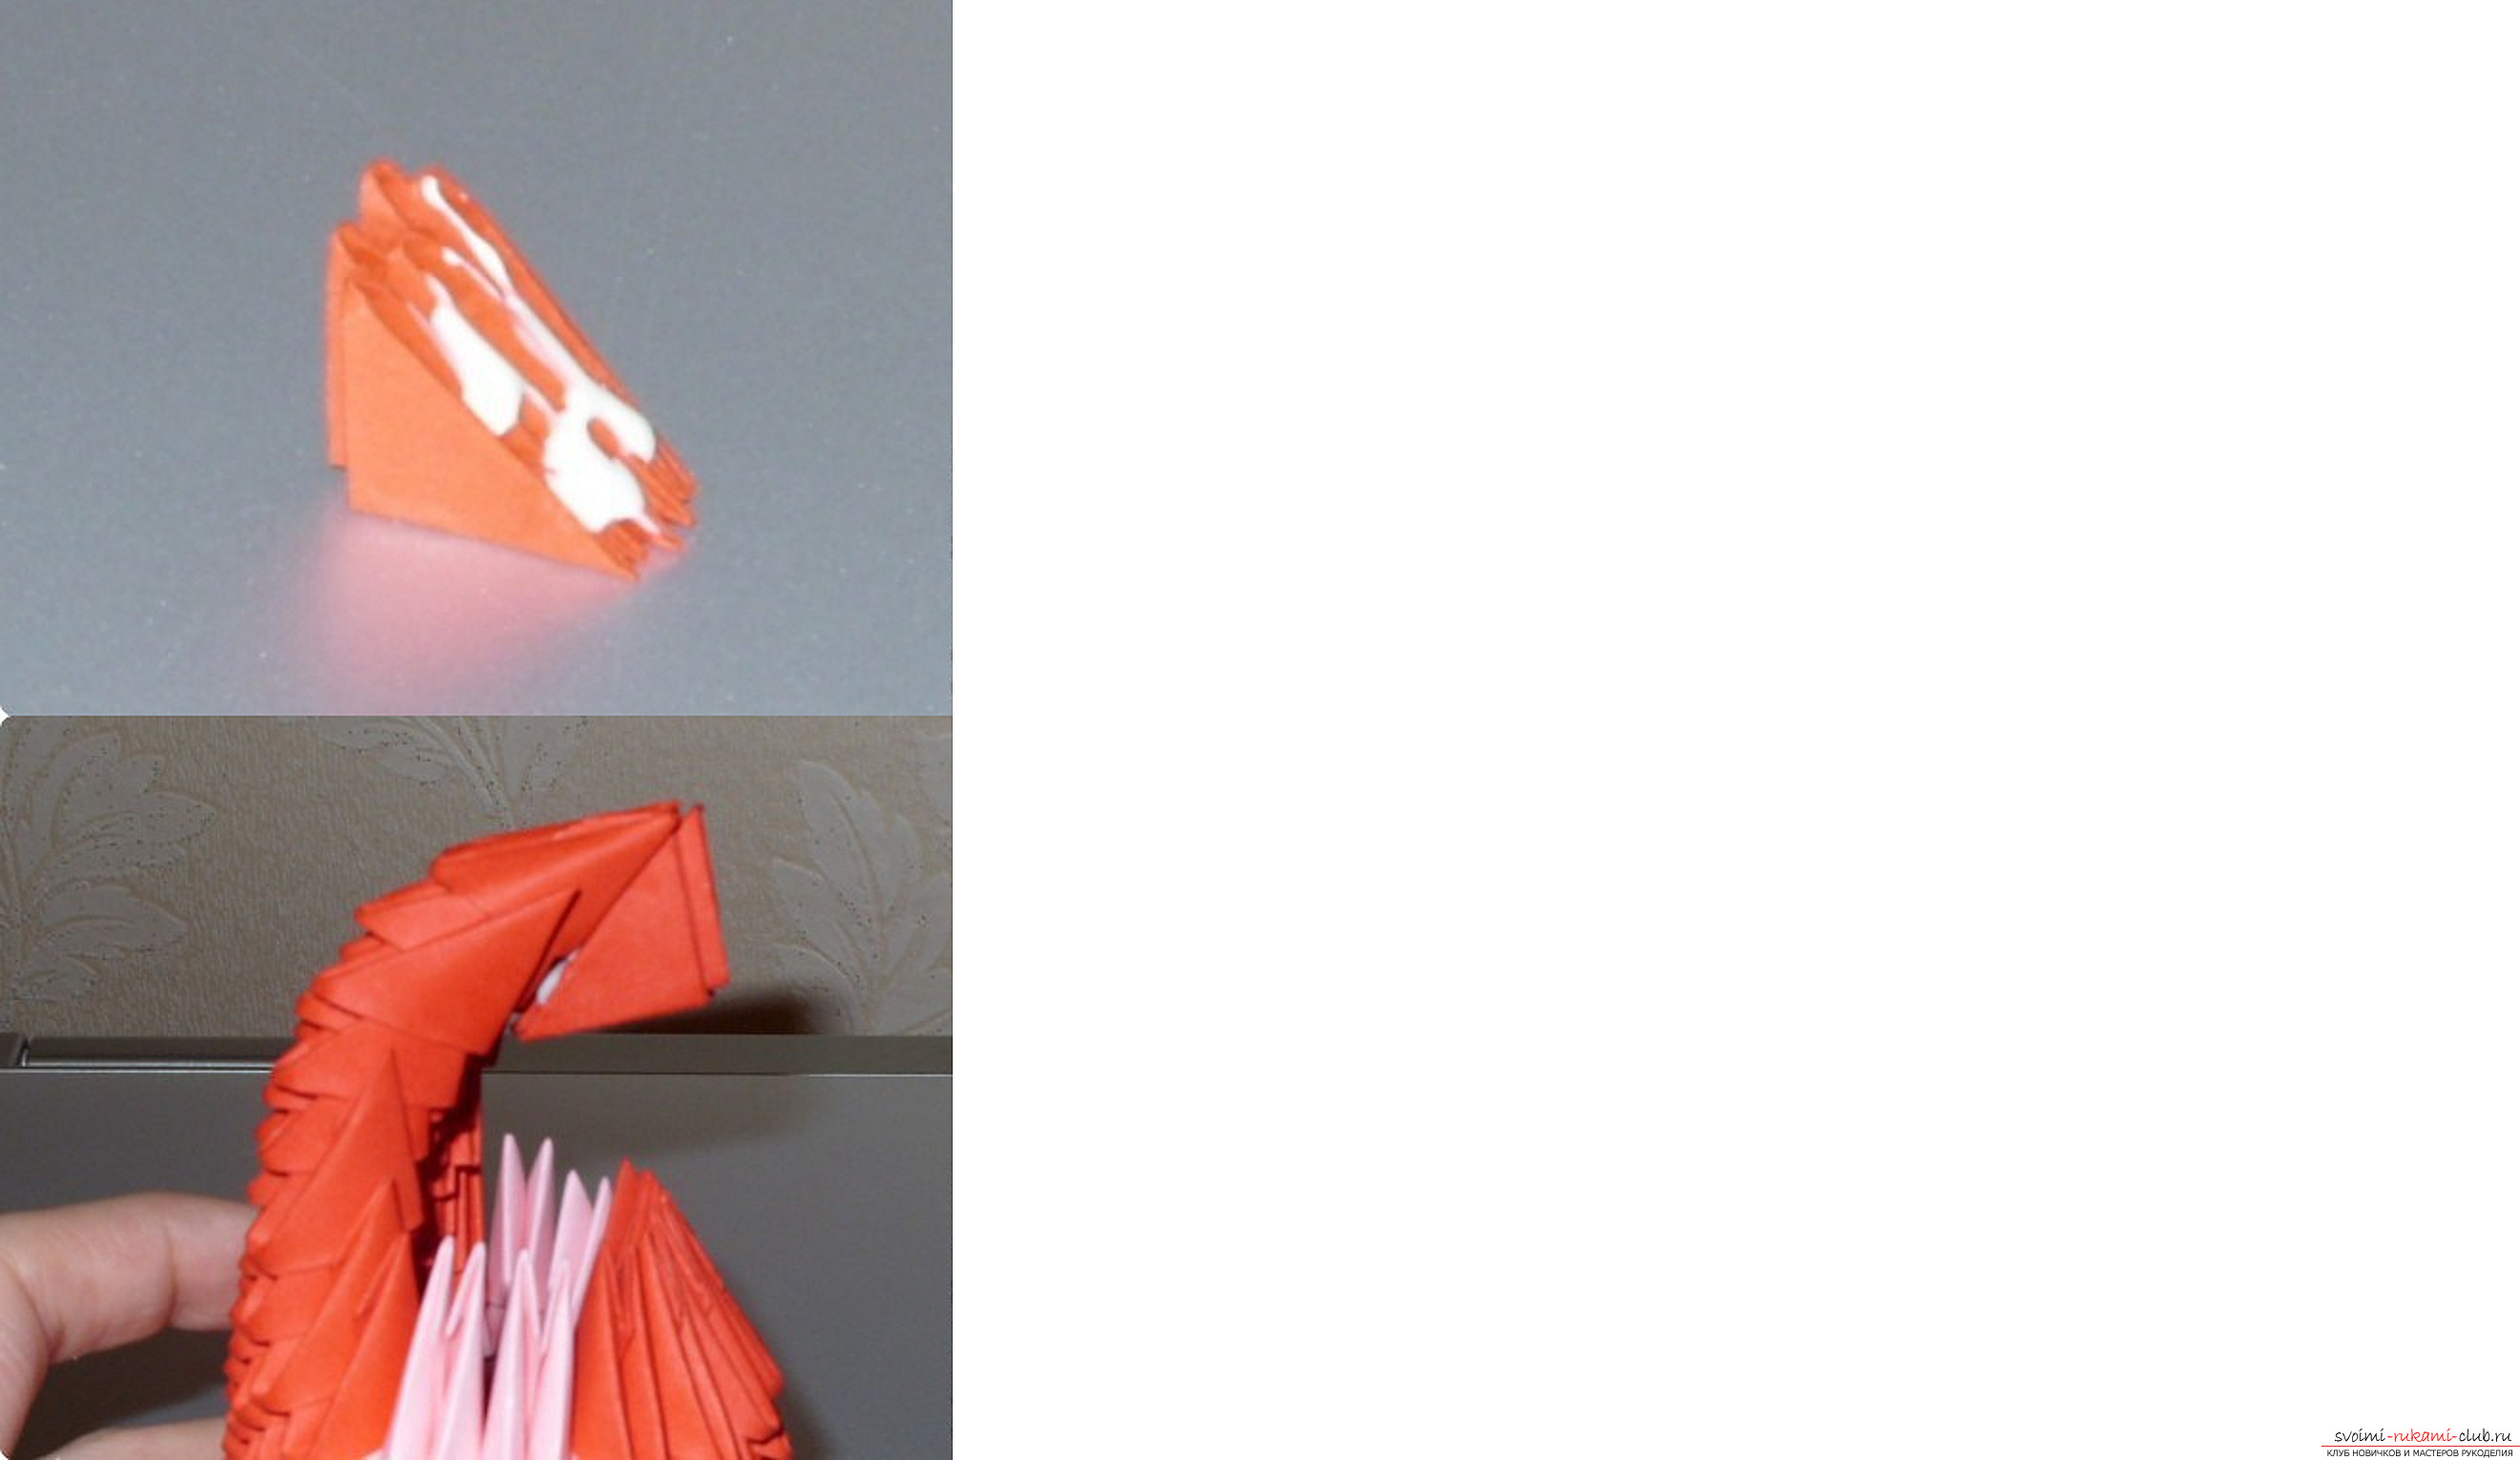 A parrot in a modular origami technique. Photo №71